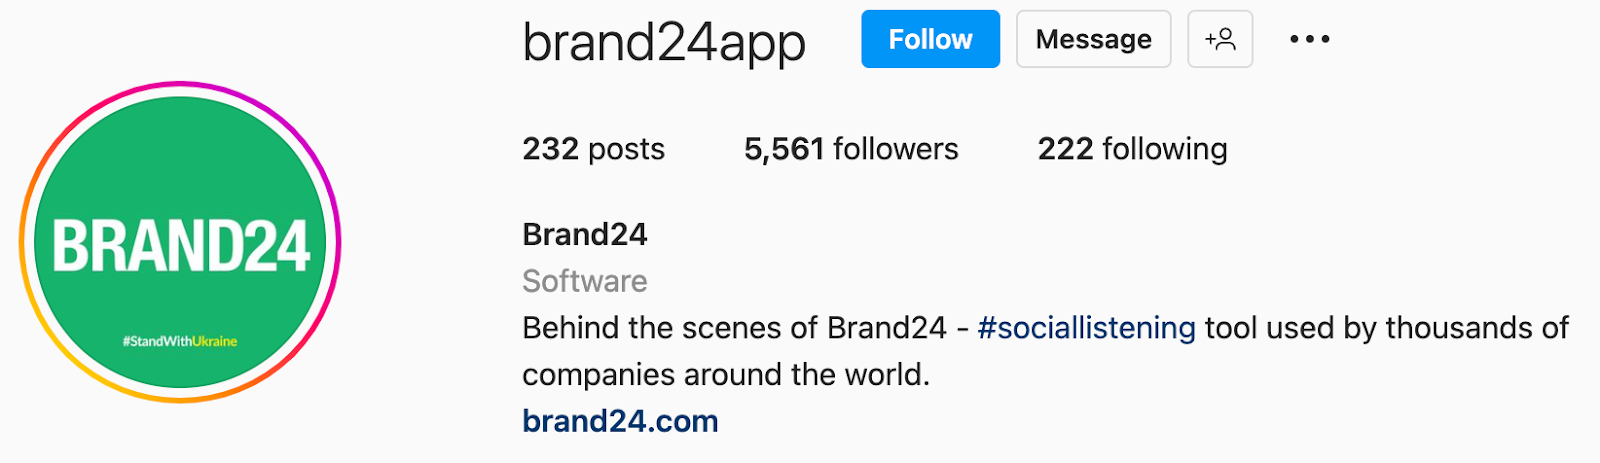 Brand24 on Instagram.